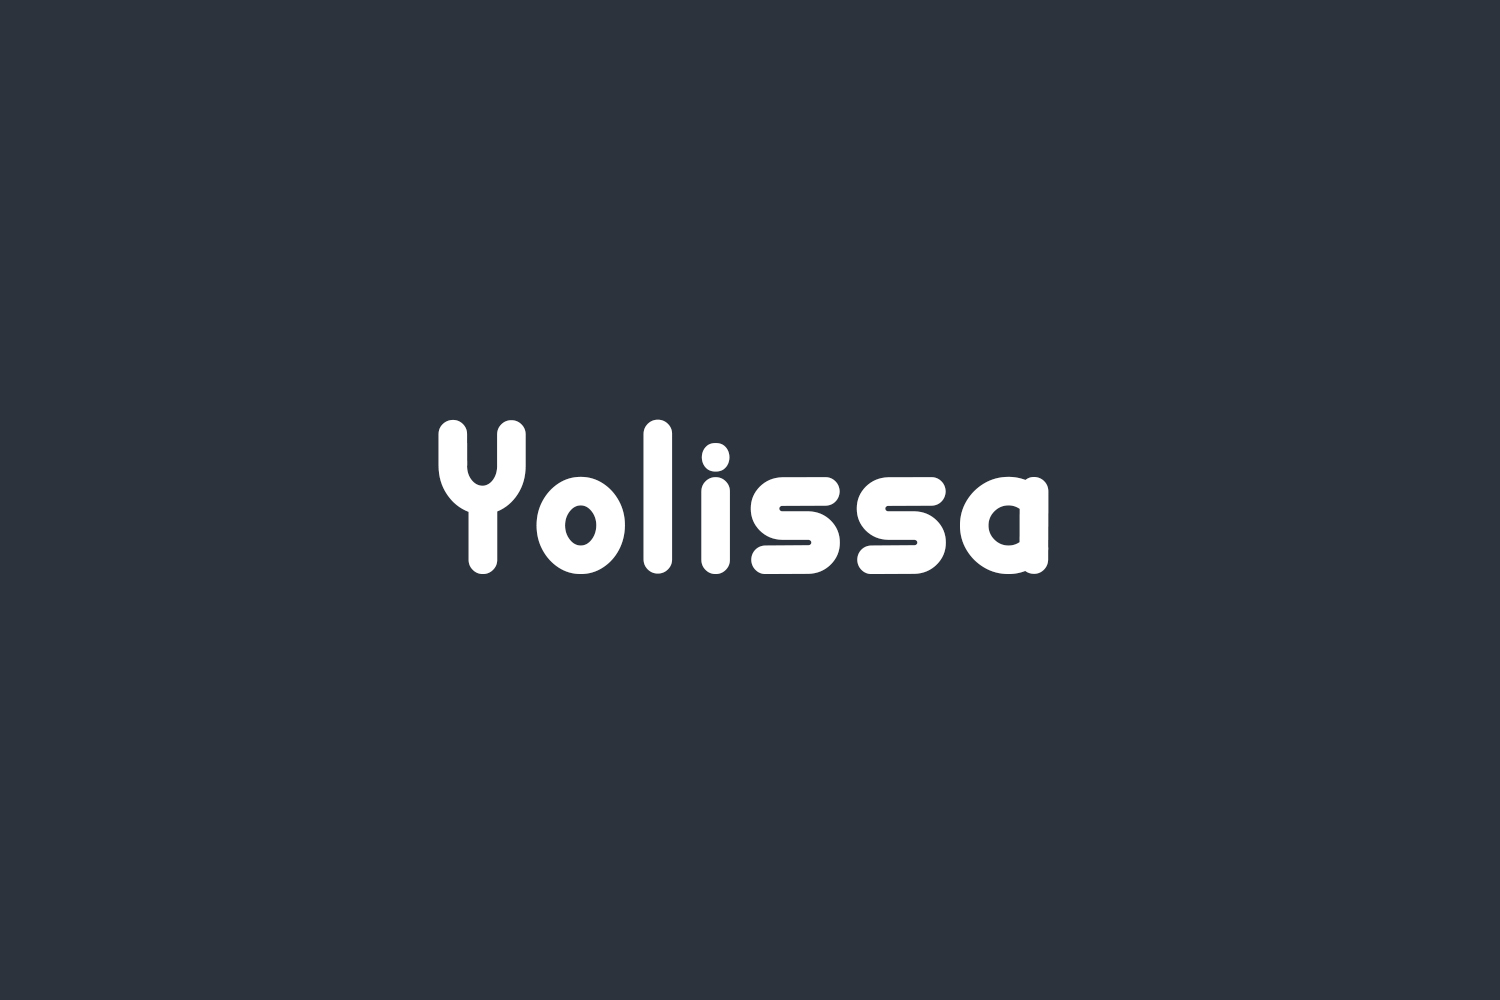 Yolissa Free Font